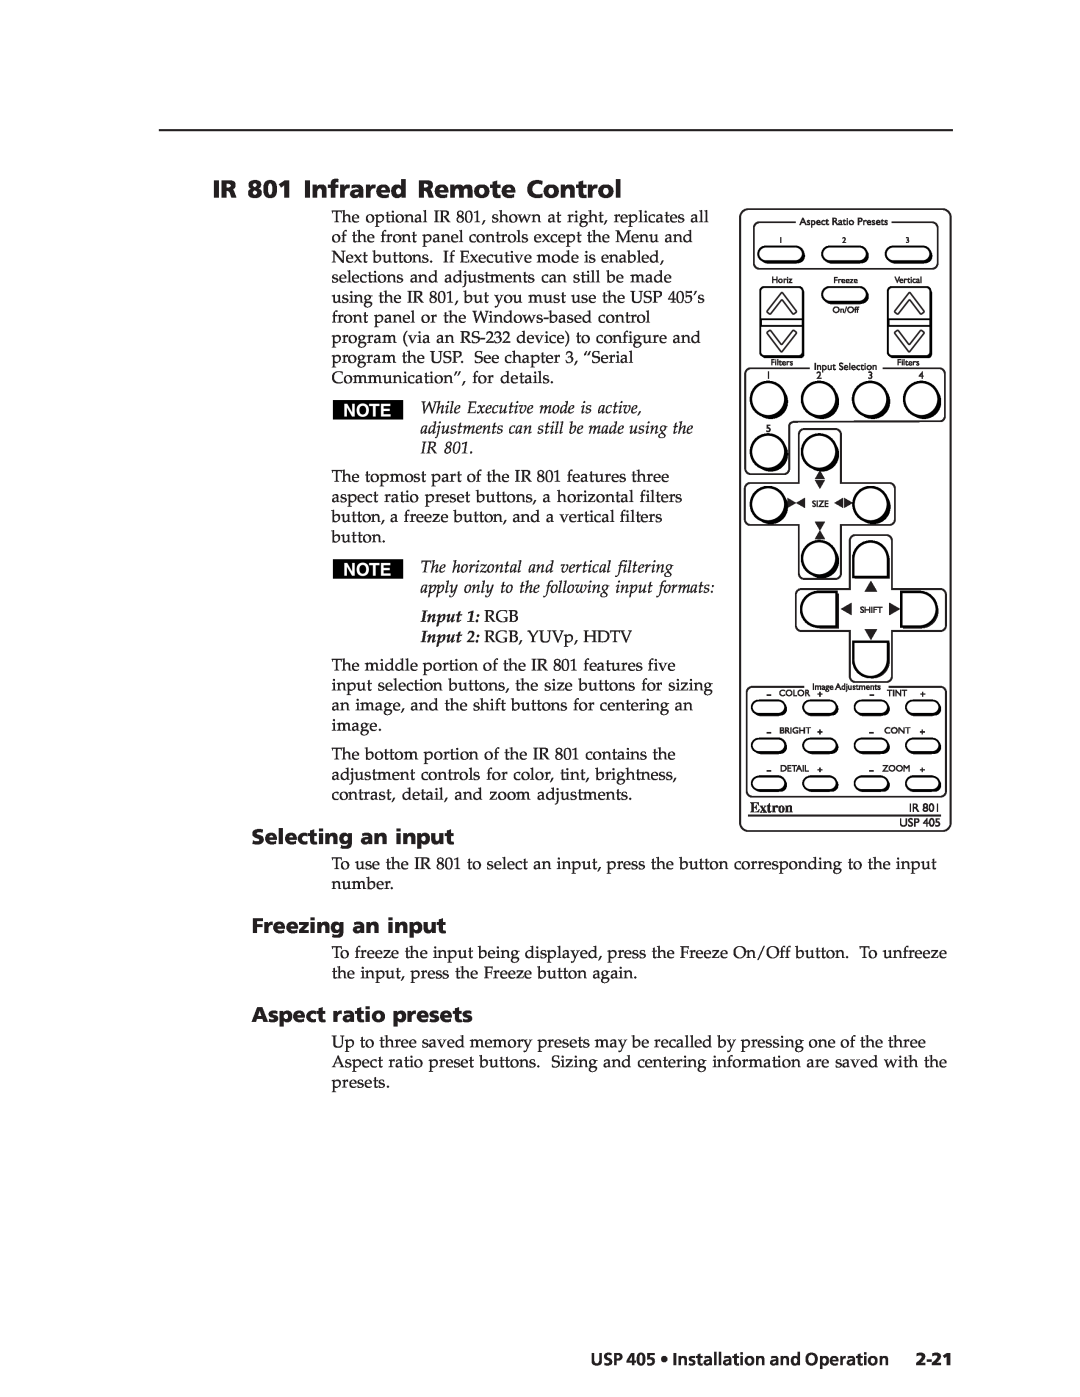 Extron electronic USP 405 IR 801 Infrared Remote Control, Selecting an input, Freezing an input, Aspect ratio presets 